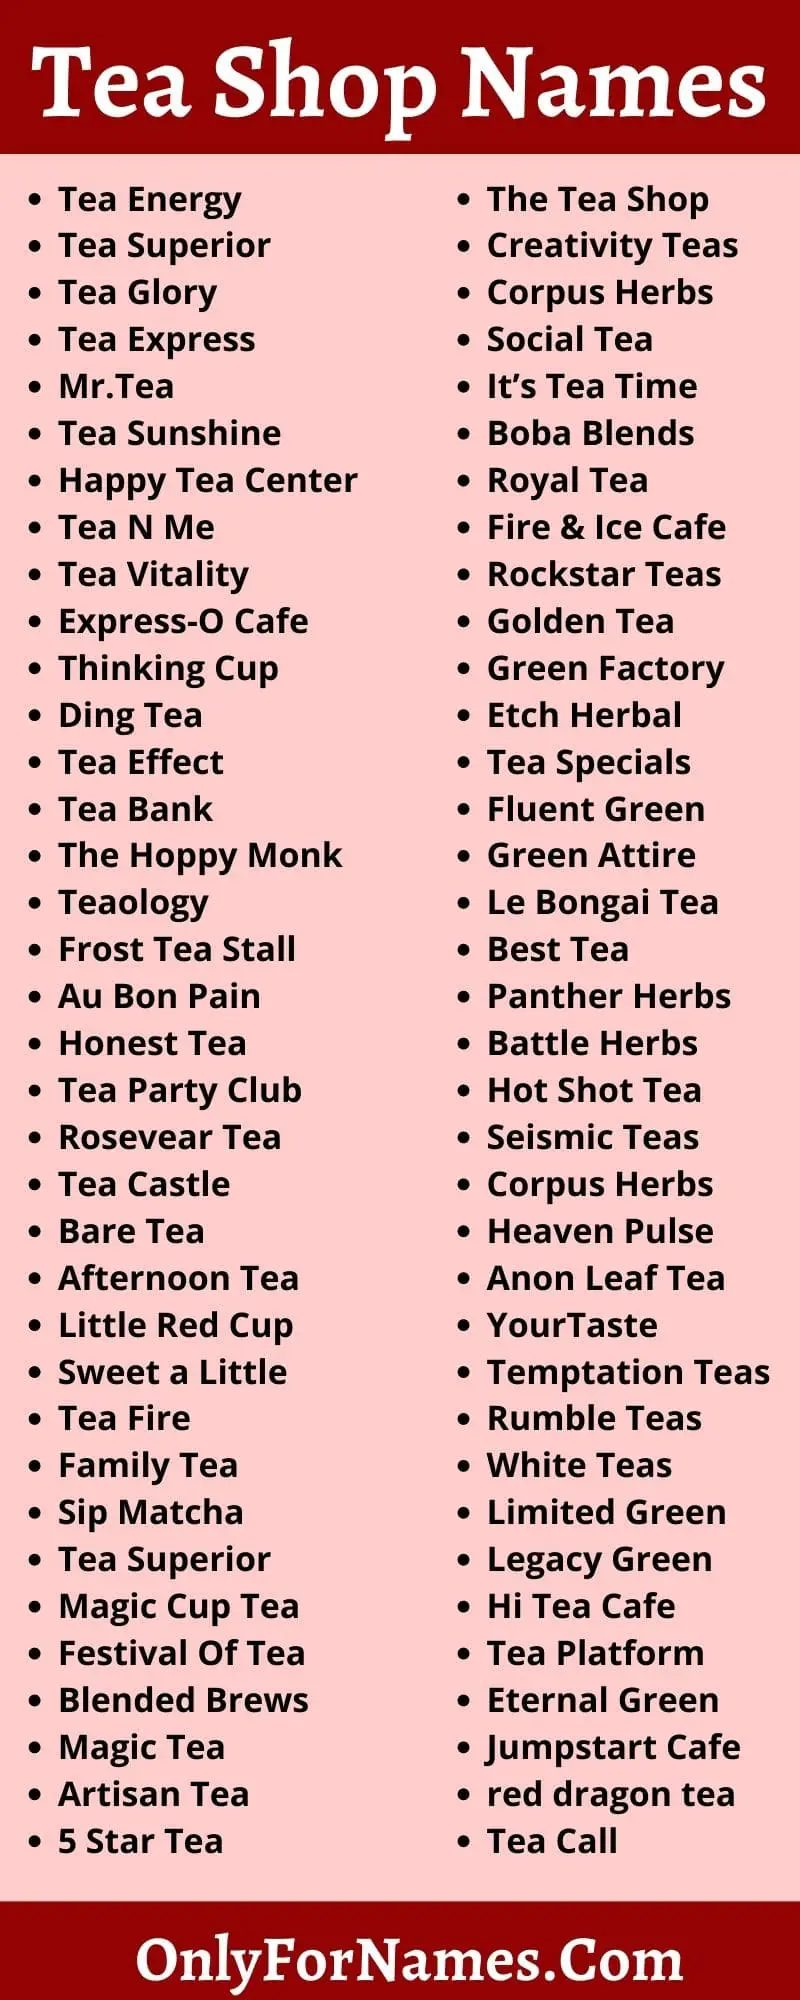 Tea Shop Names [2021] For Tea Branding And Companies